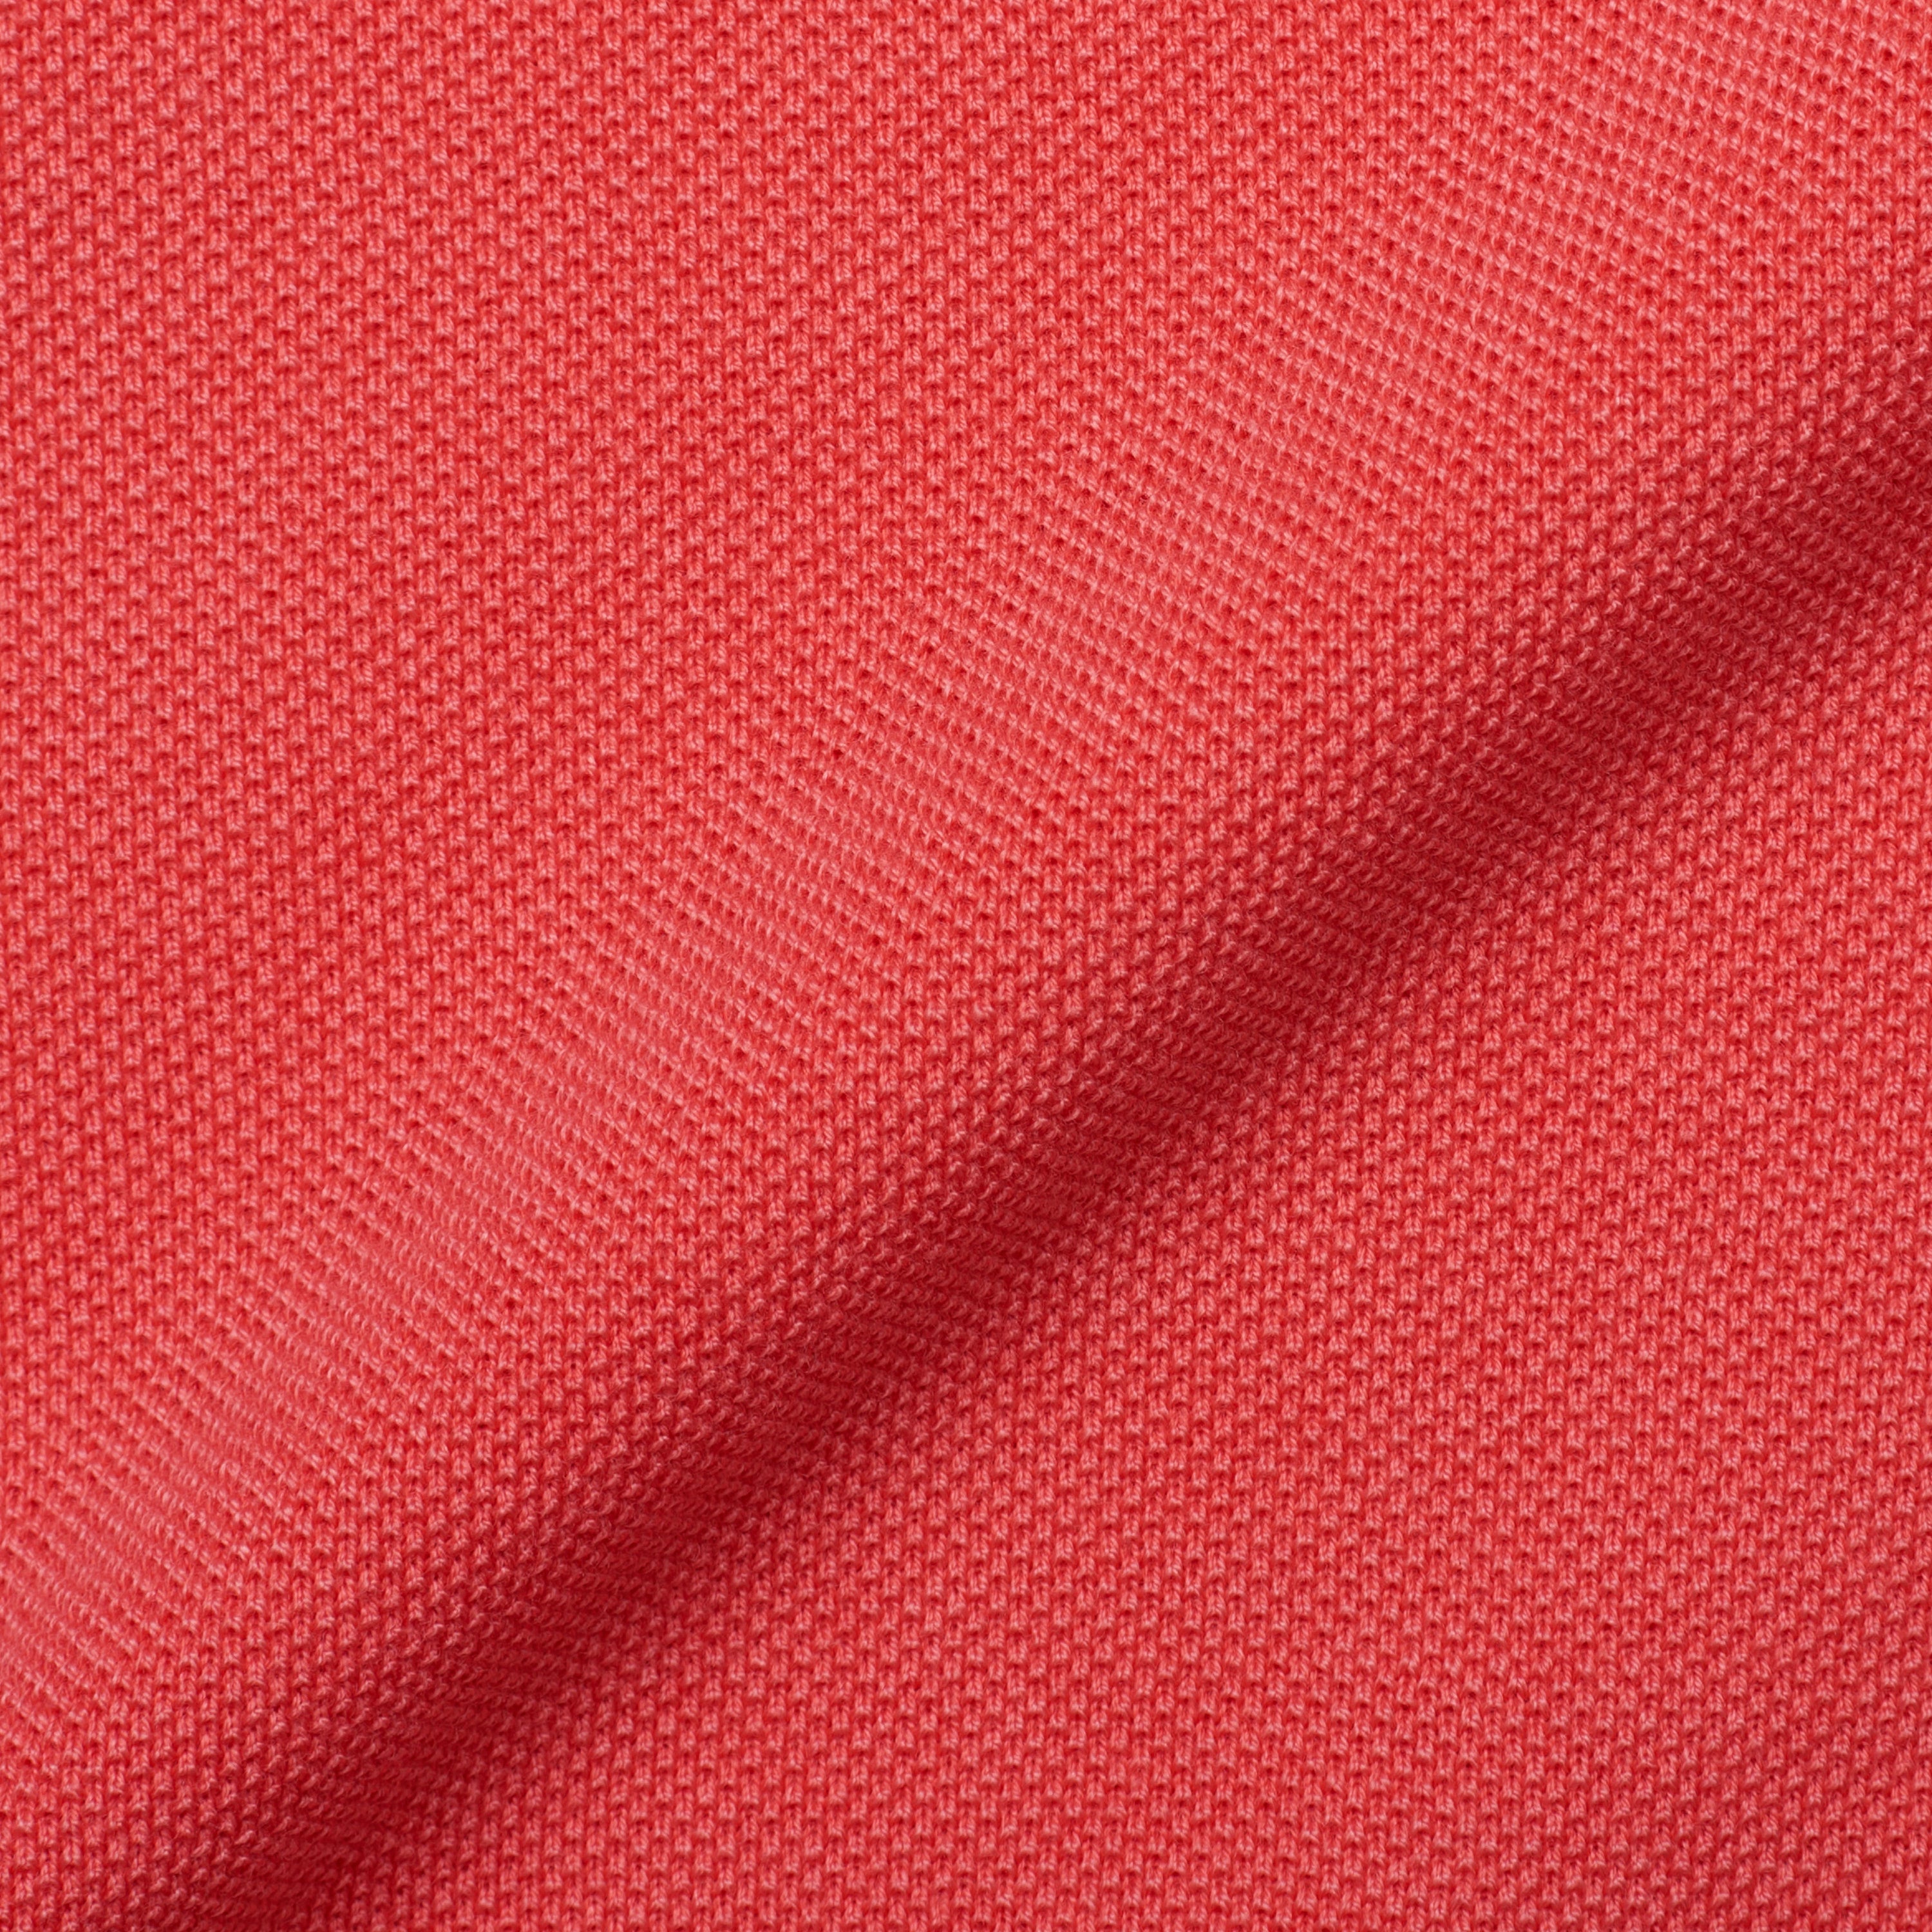 FEDELI "Damper" Dark Pink Cotton Short Sleeve Pique Polo Shirt EU 50 NEW US M FEDELI